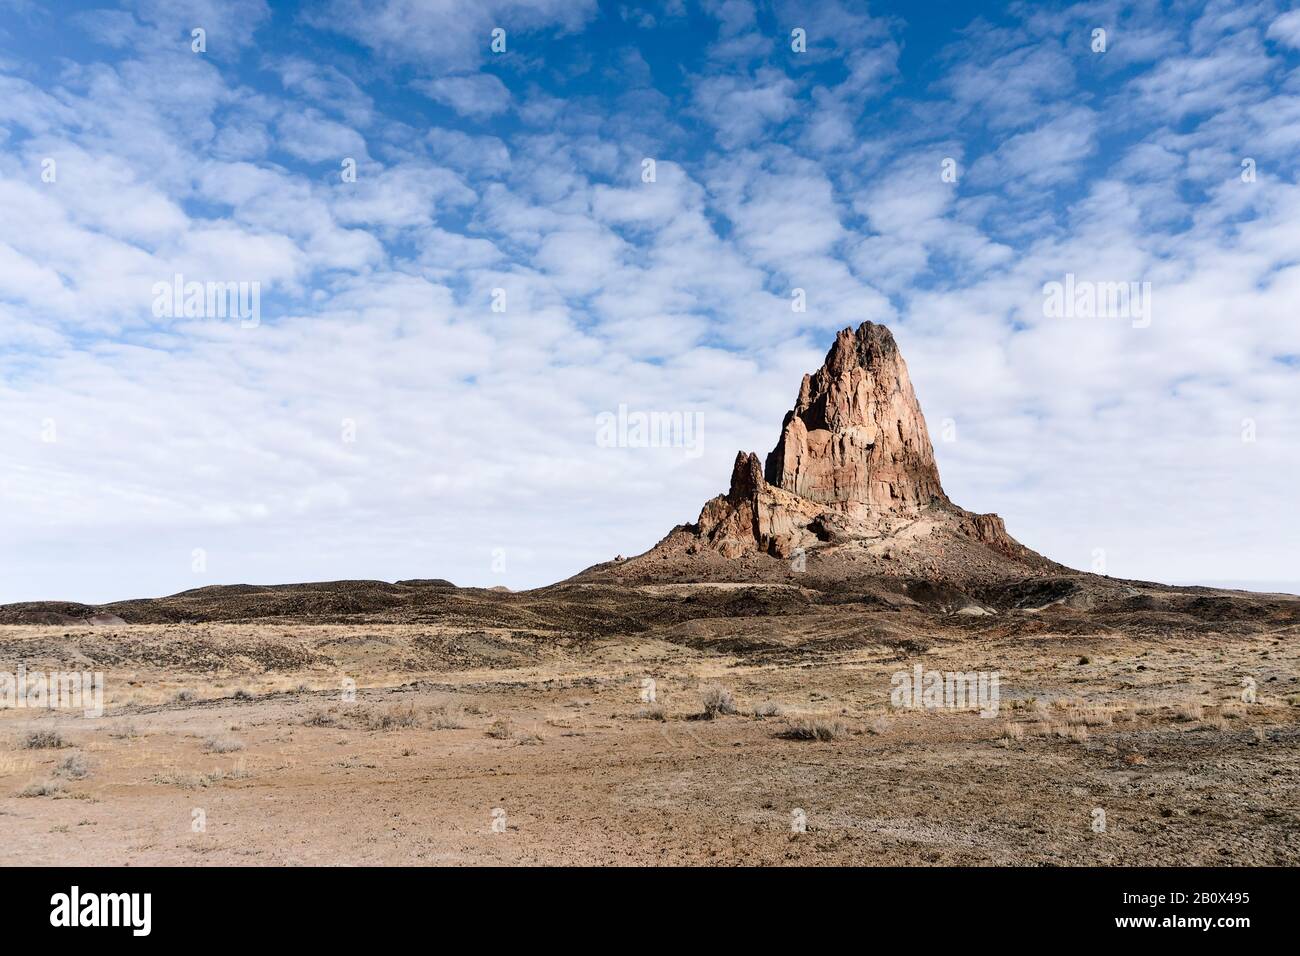 Monument Valley Desert Landscape Wild West Background In Arizona Usa Stock Photo Alamy